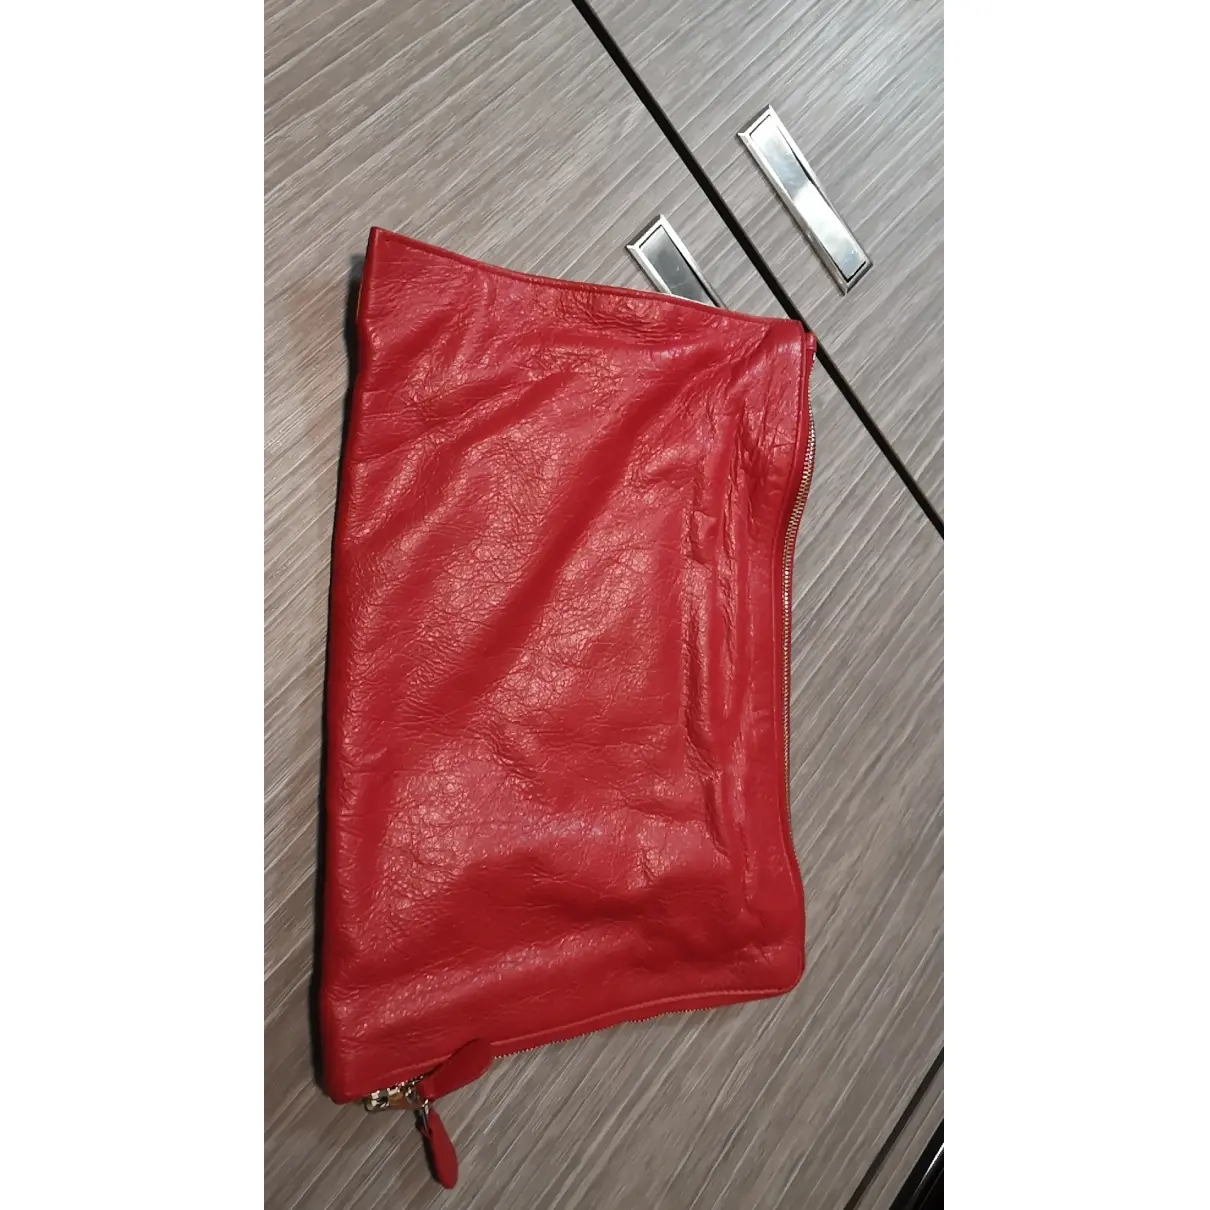 Buy Balenciaga City leather clutch bag online